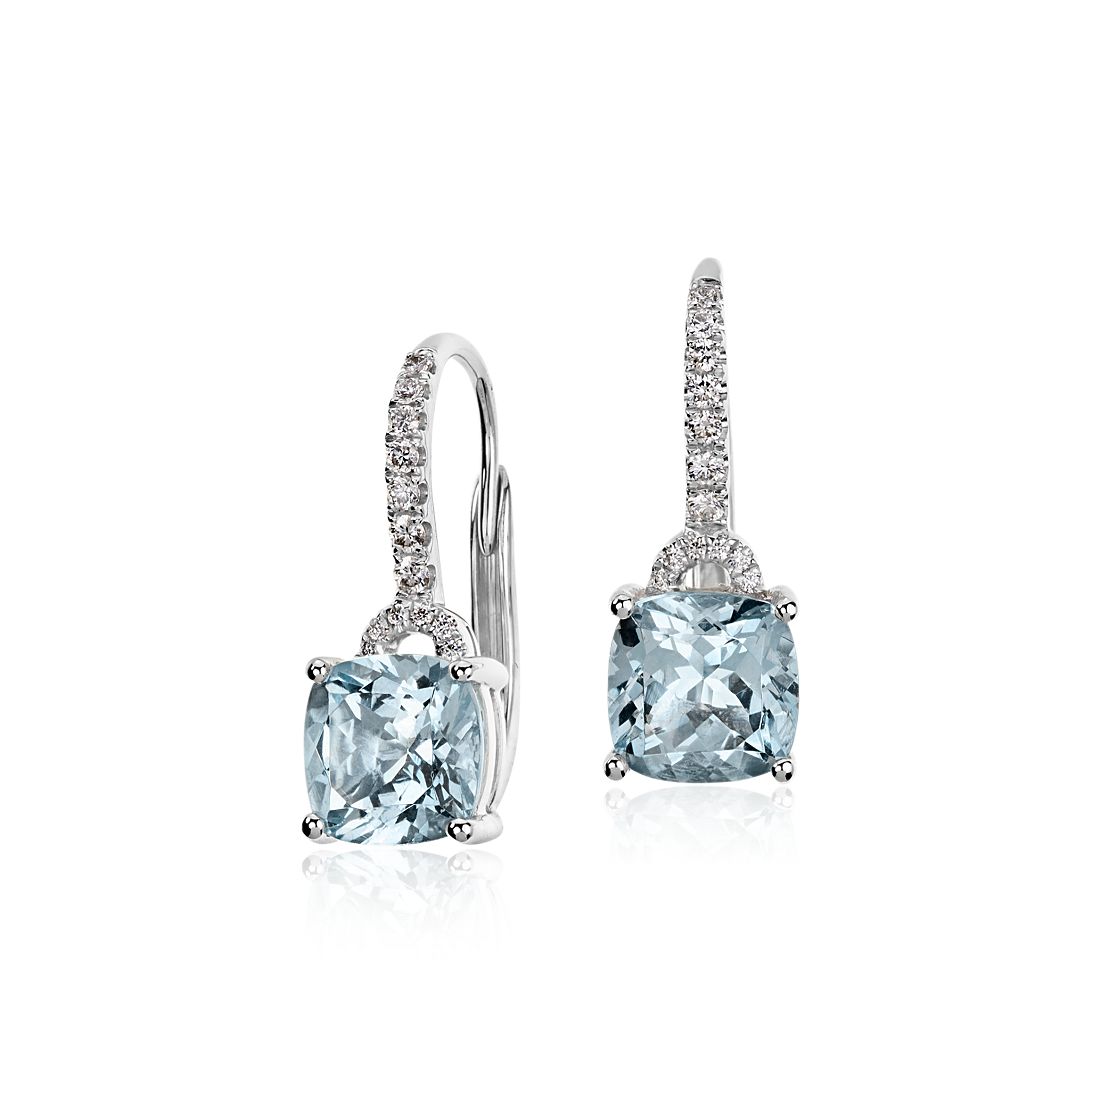 Aquamarine Cushion and Diamond Drop Earrings in 14k White Gold (7x7mm)